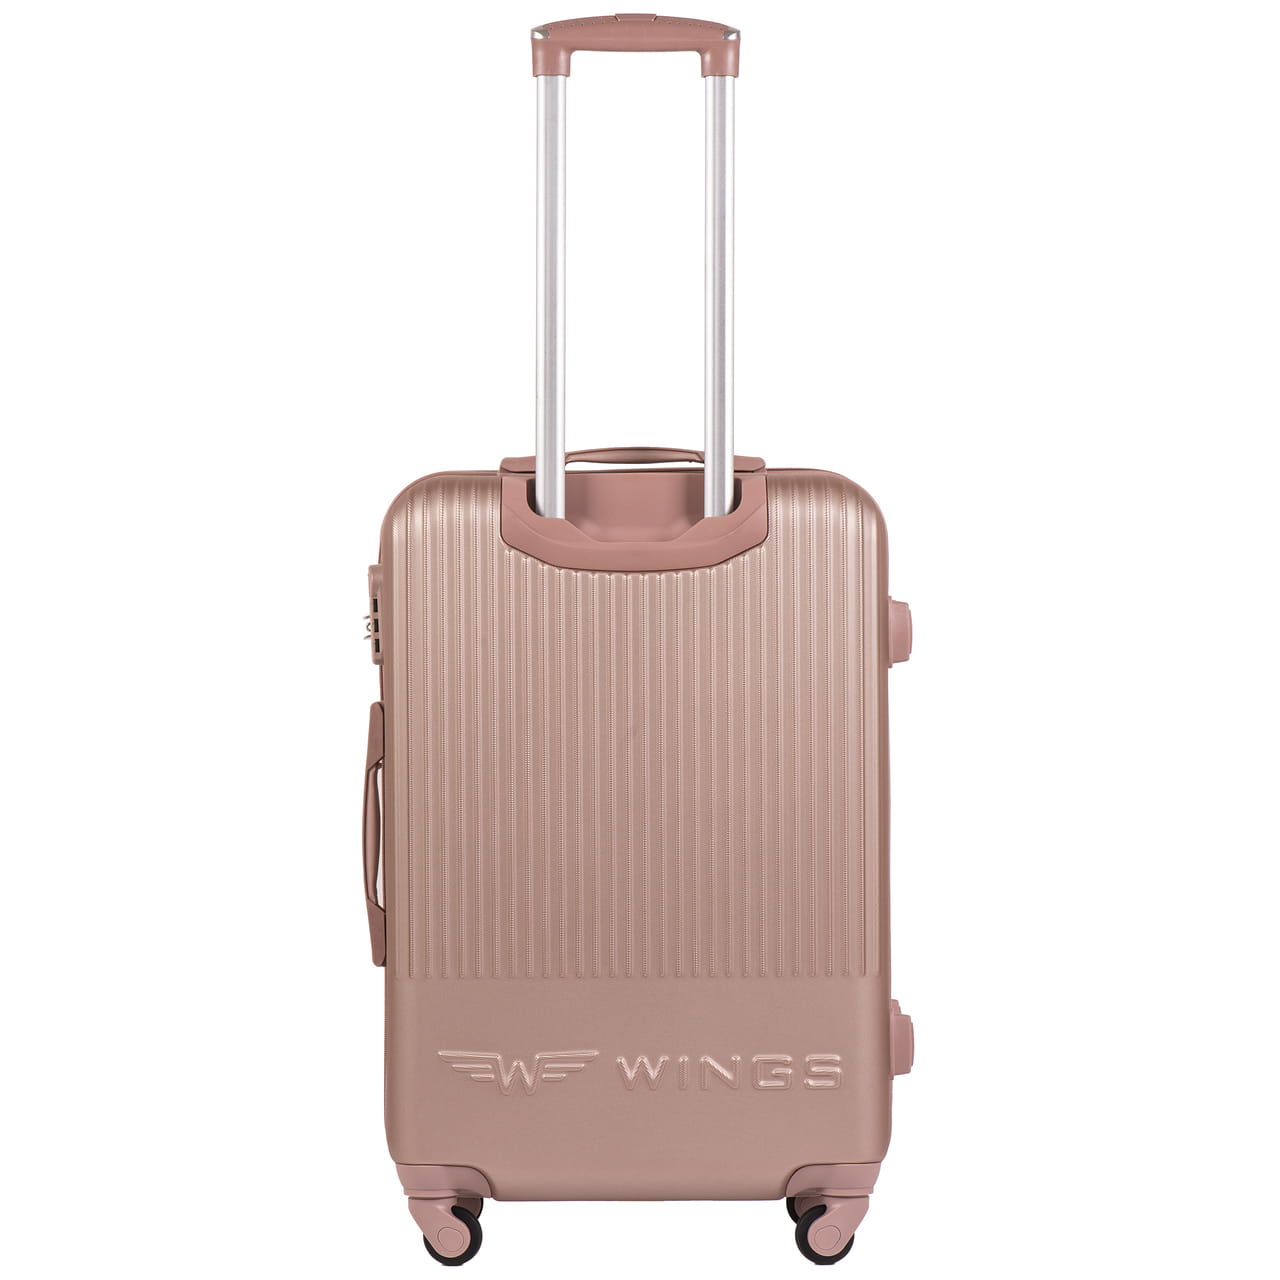 SWL01-rose-gold-keskmine-reisikohver-M-ABS(plastik)-63l-kohvrimaailm-tagant